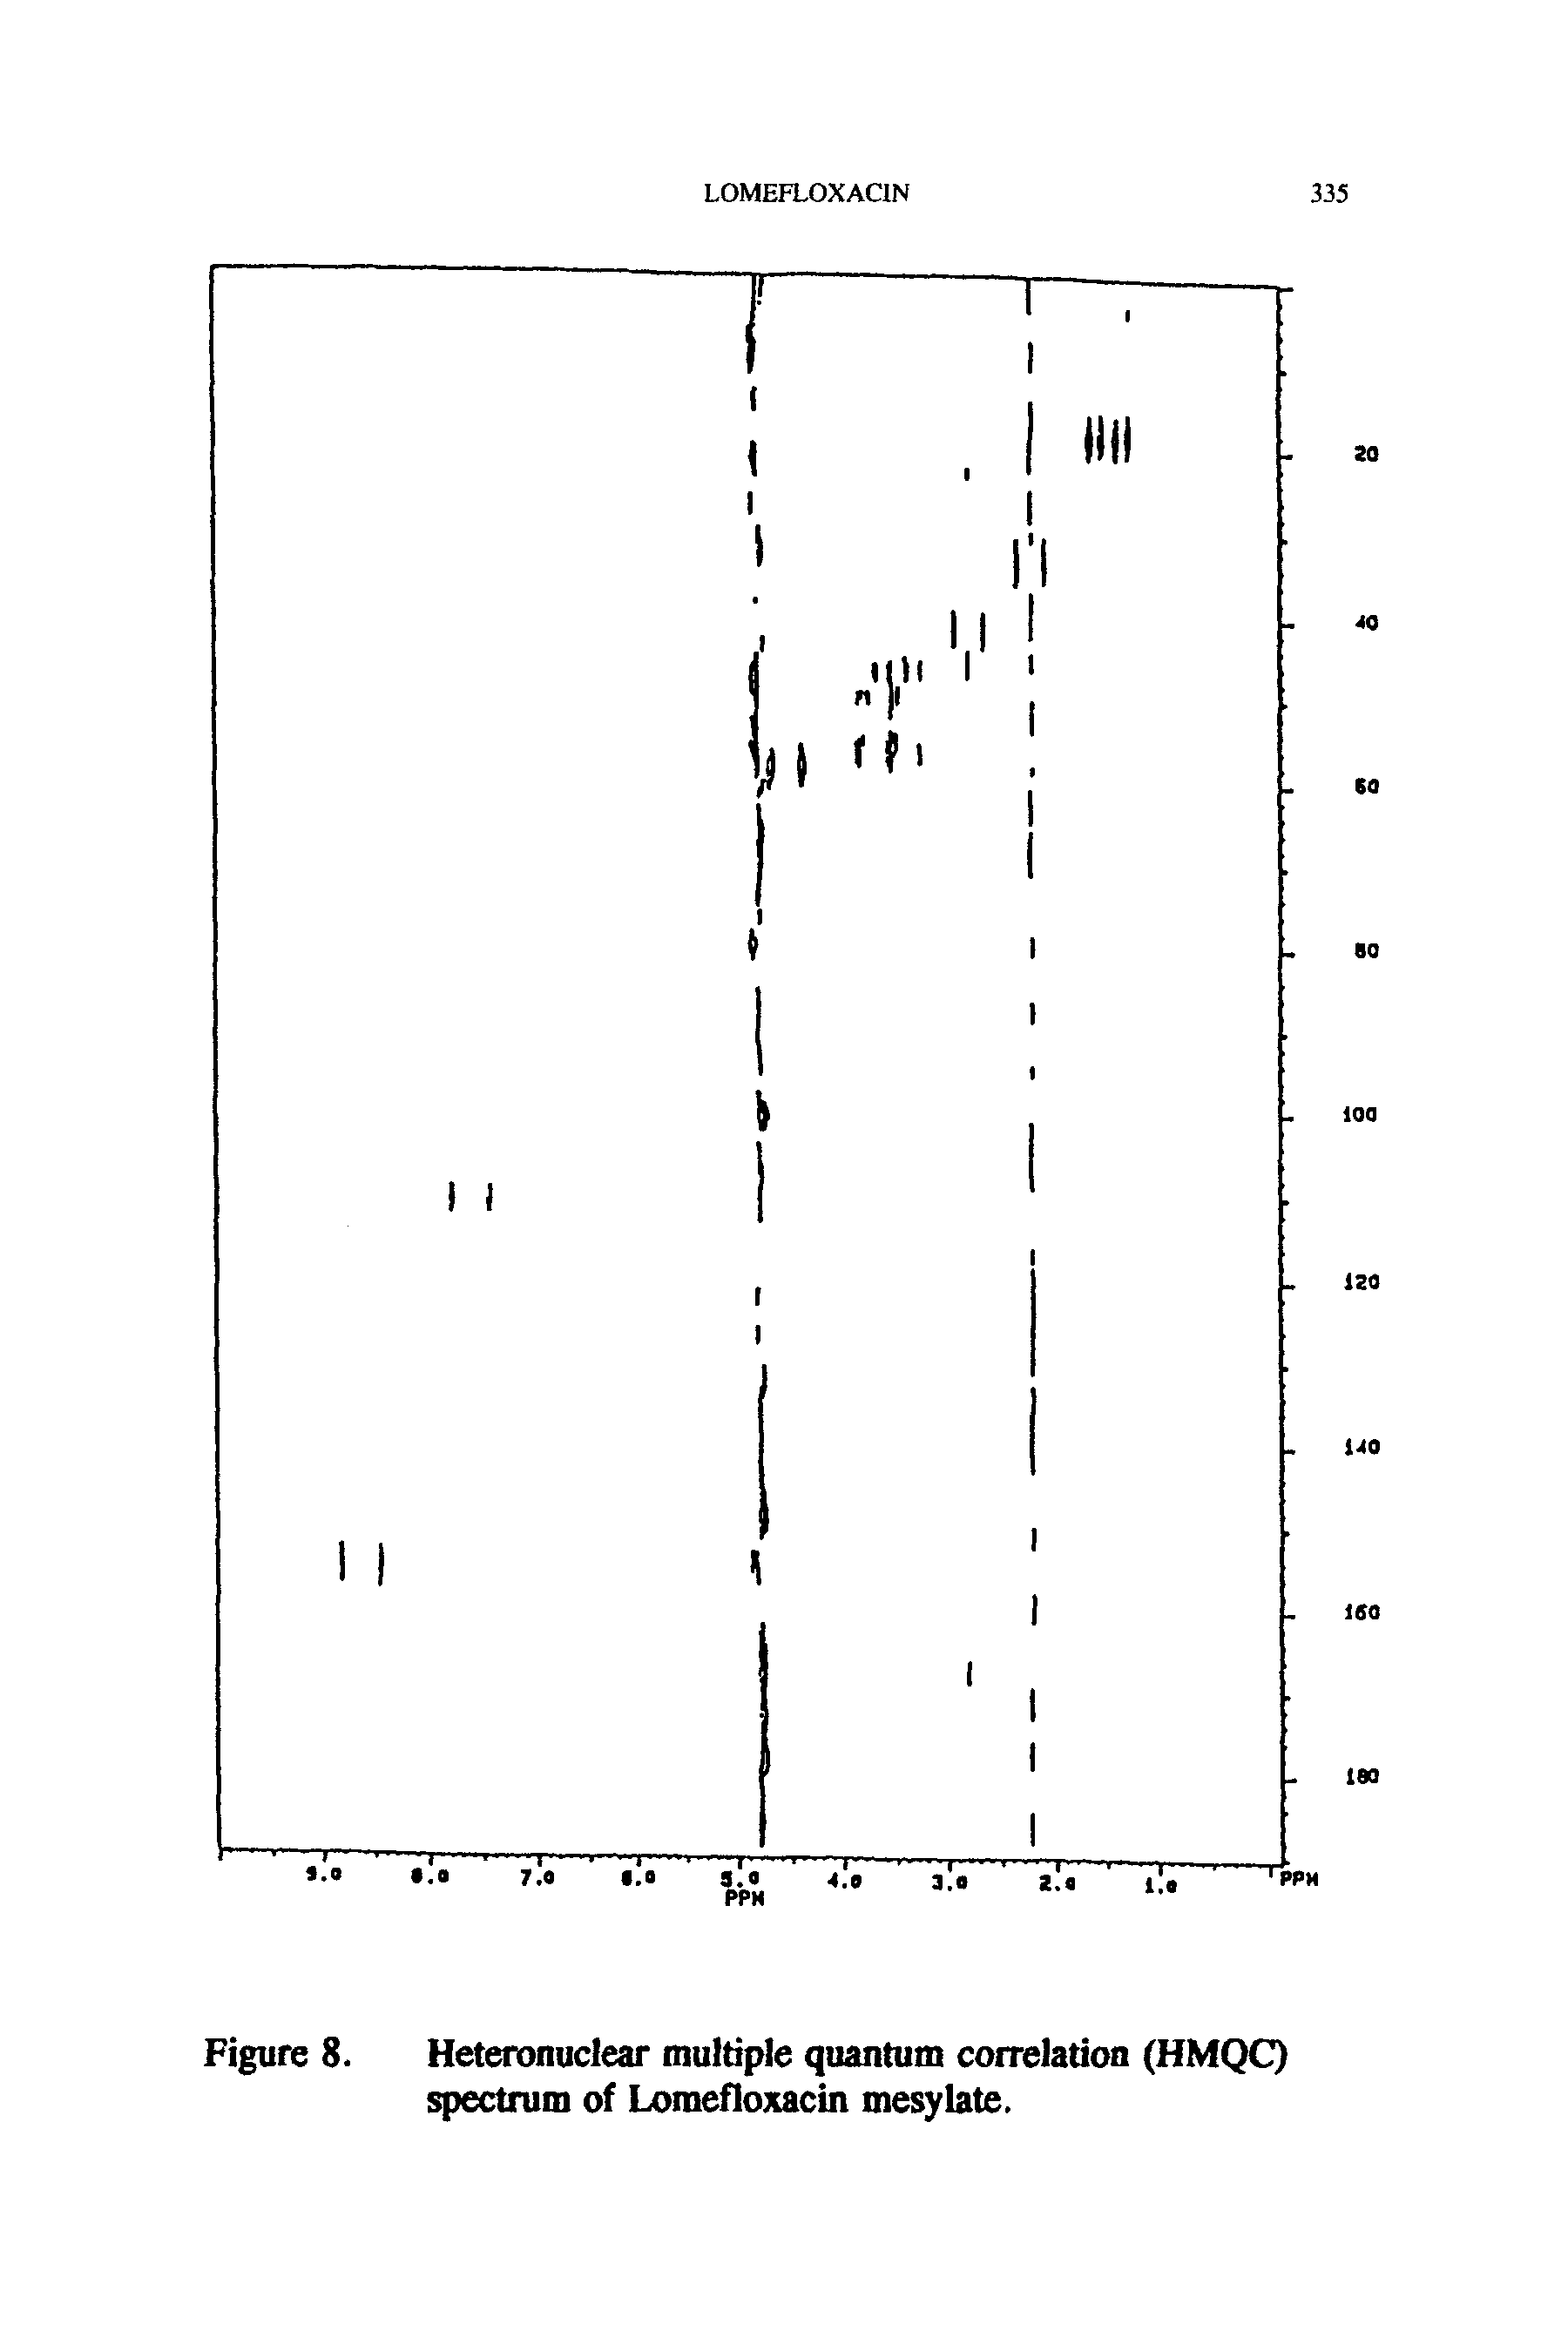 Figure 8. Heteronuclear multiple quantum correlation (HMQC) spectrum of Lomefloxacin mesylate.